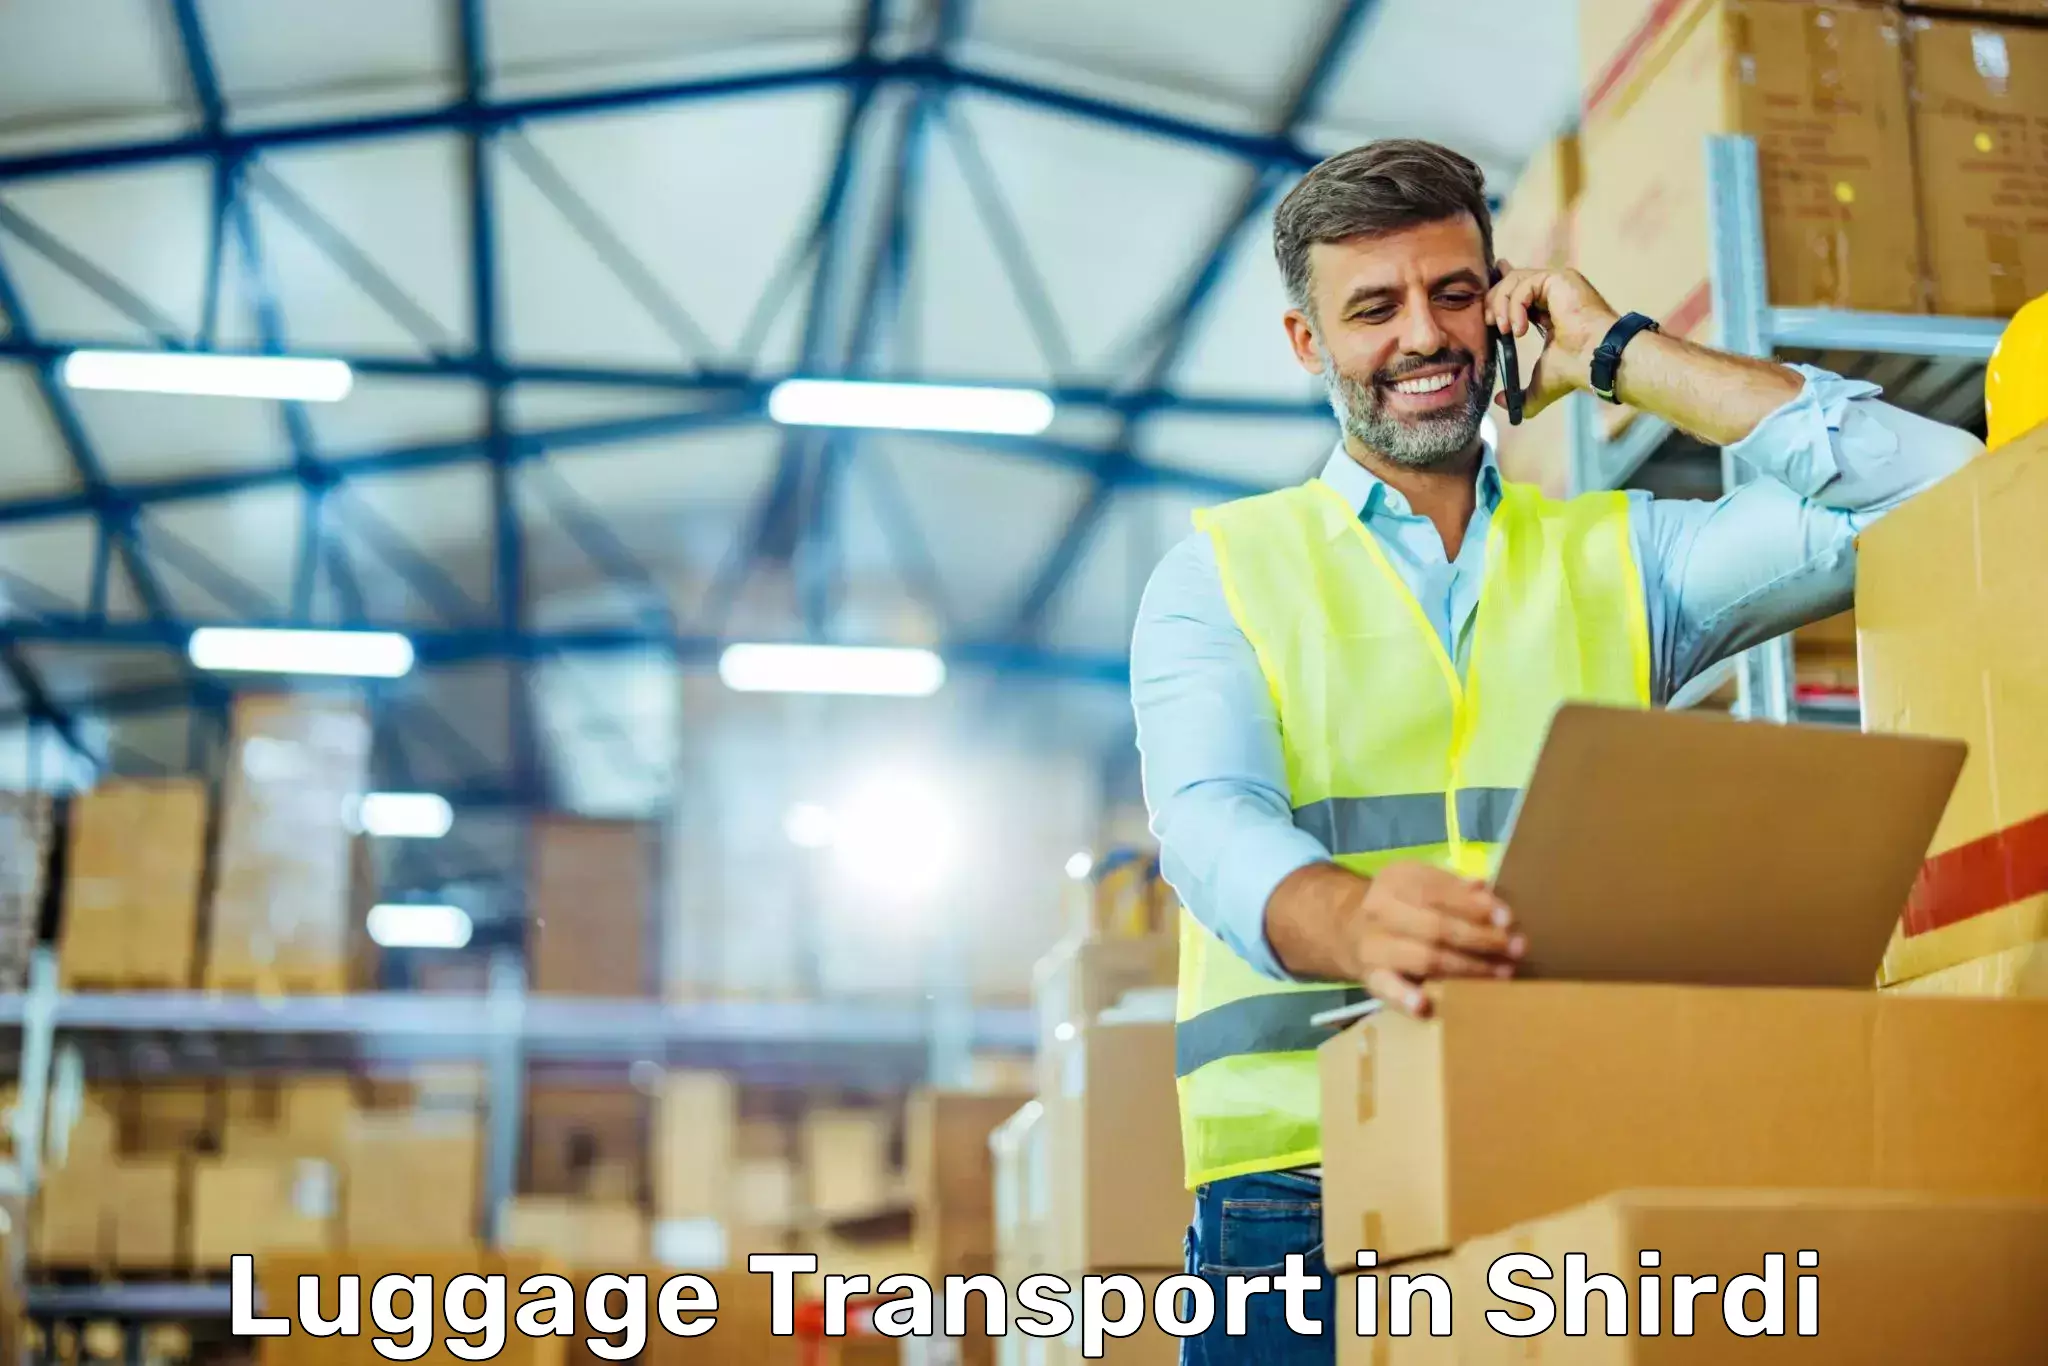 Domestic luggage transport in Shirdi